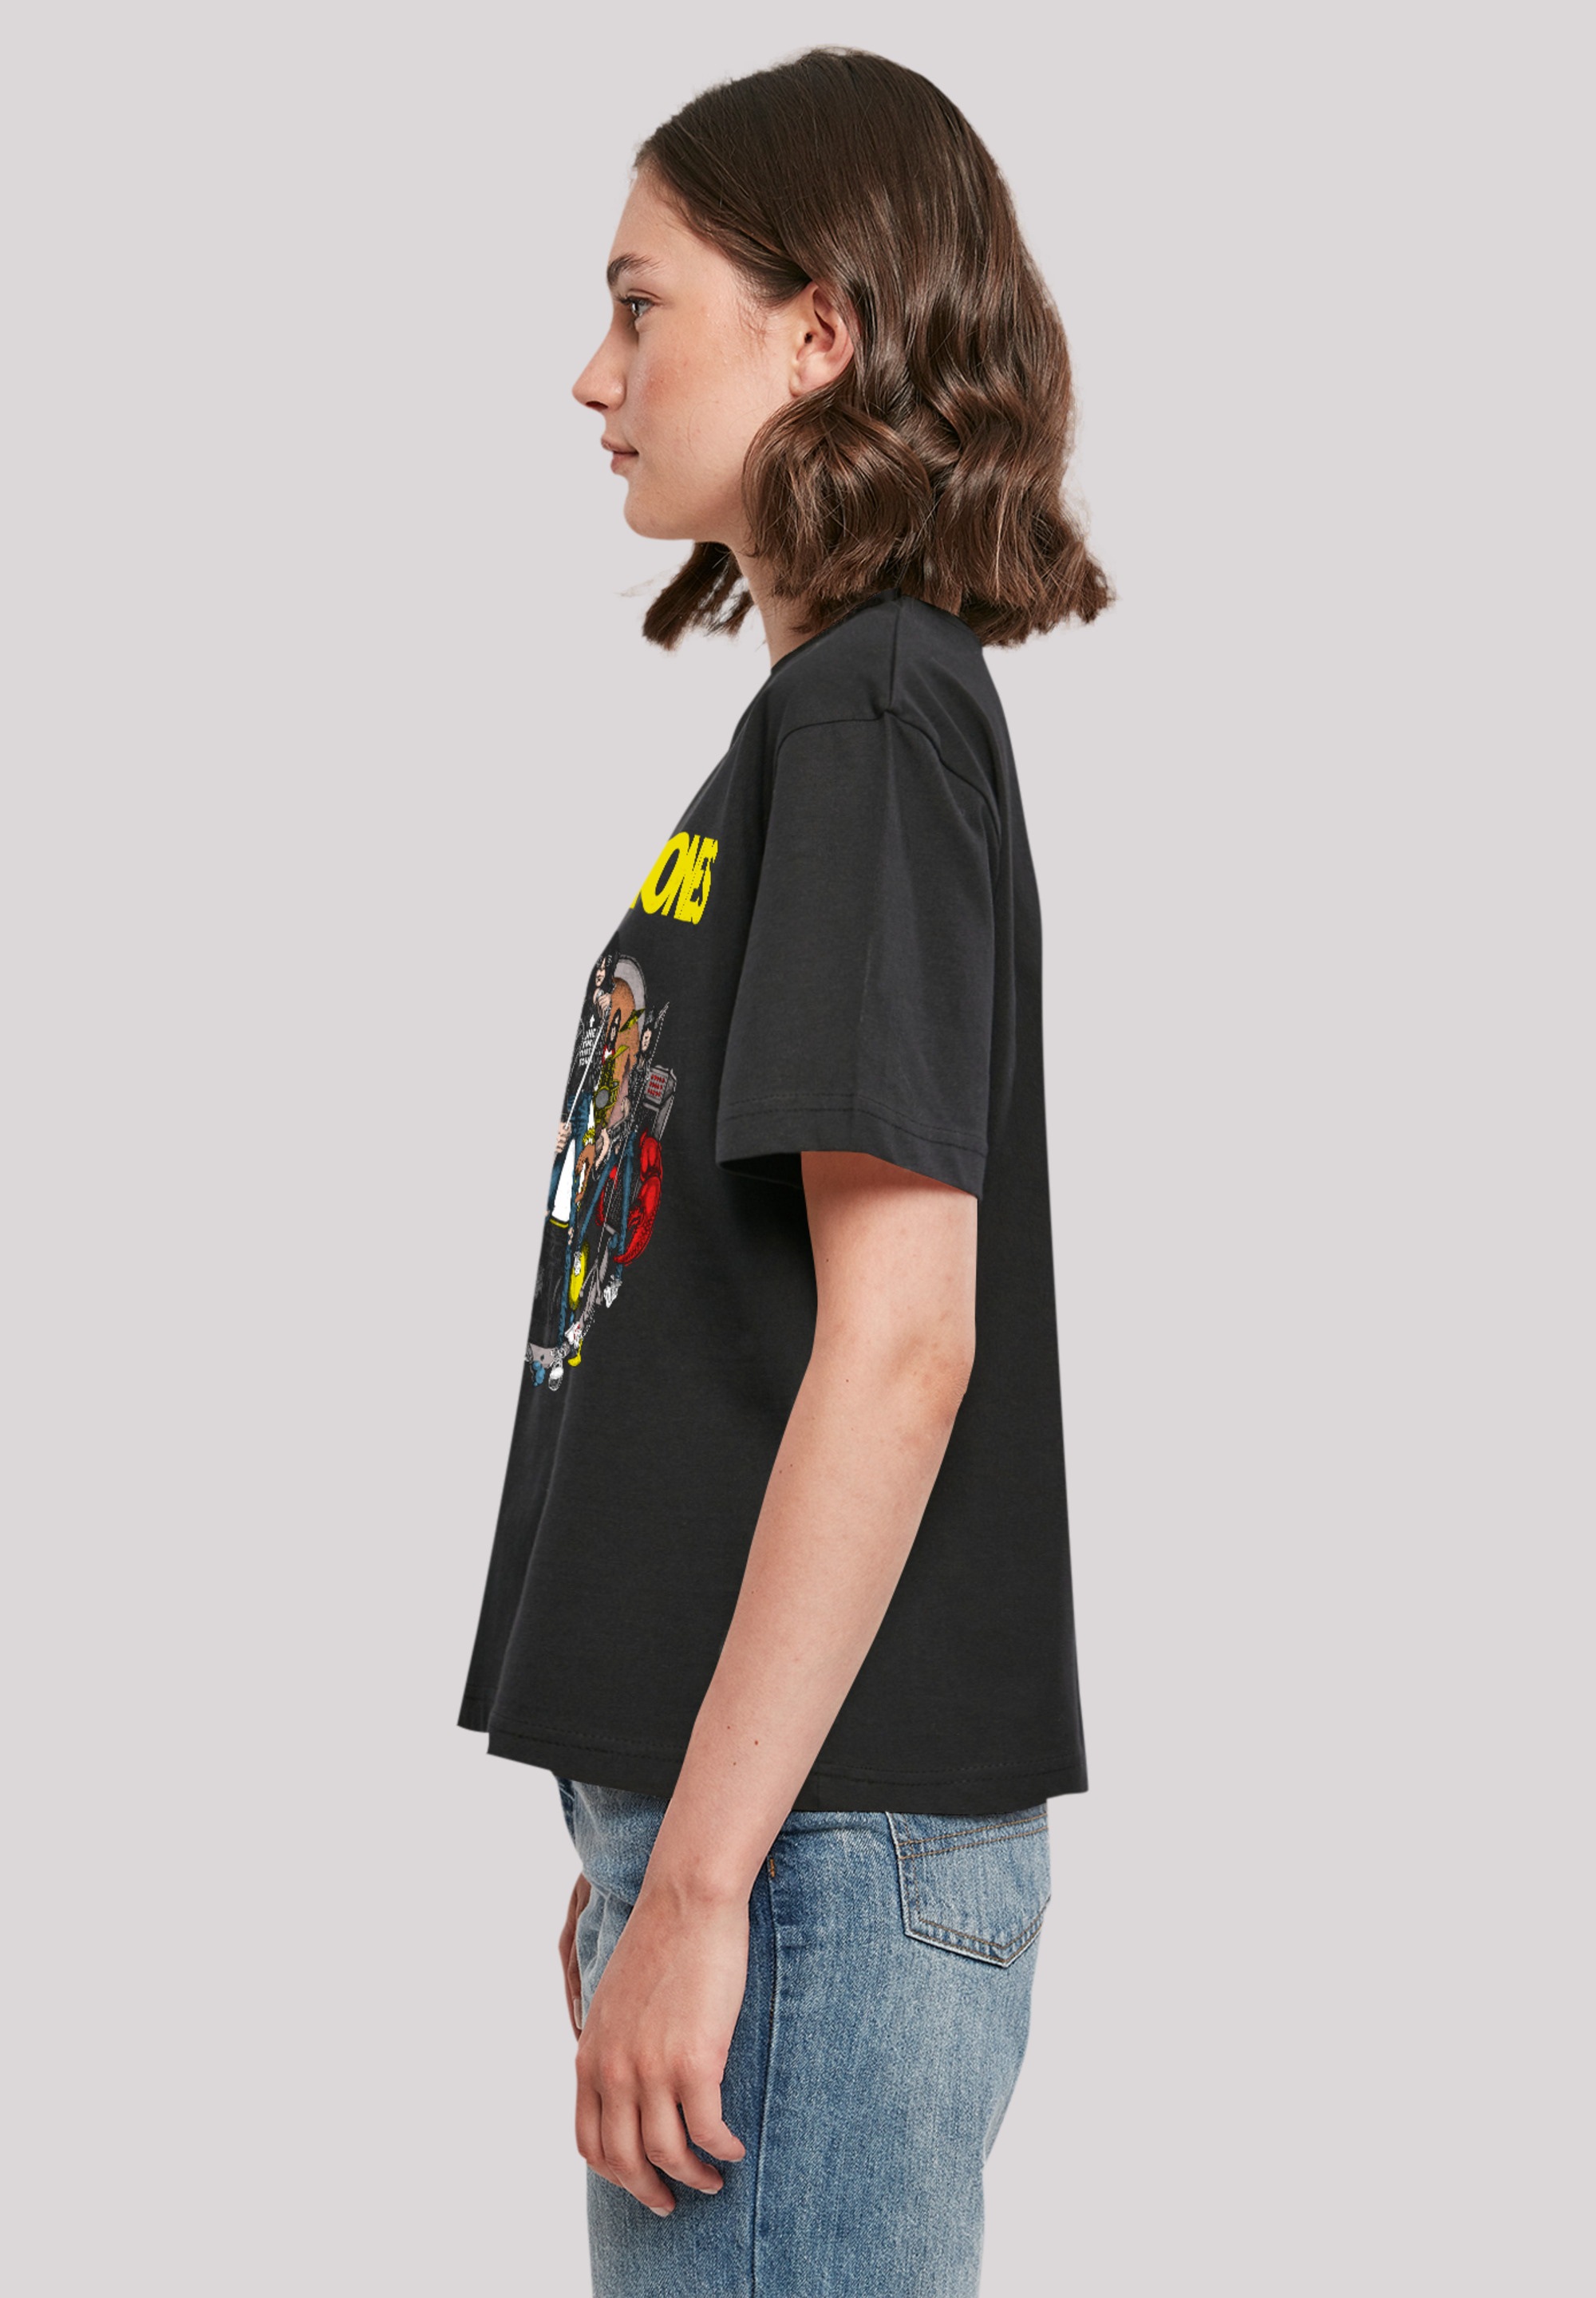 F4NT4STIC T-Shirt »Ramones Rock Musik Band Road To Ruin«, Premium Qualität,  Band, Rock-Musik online kaufen | I'm walking